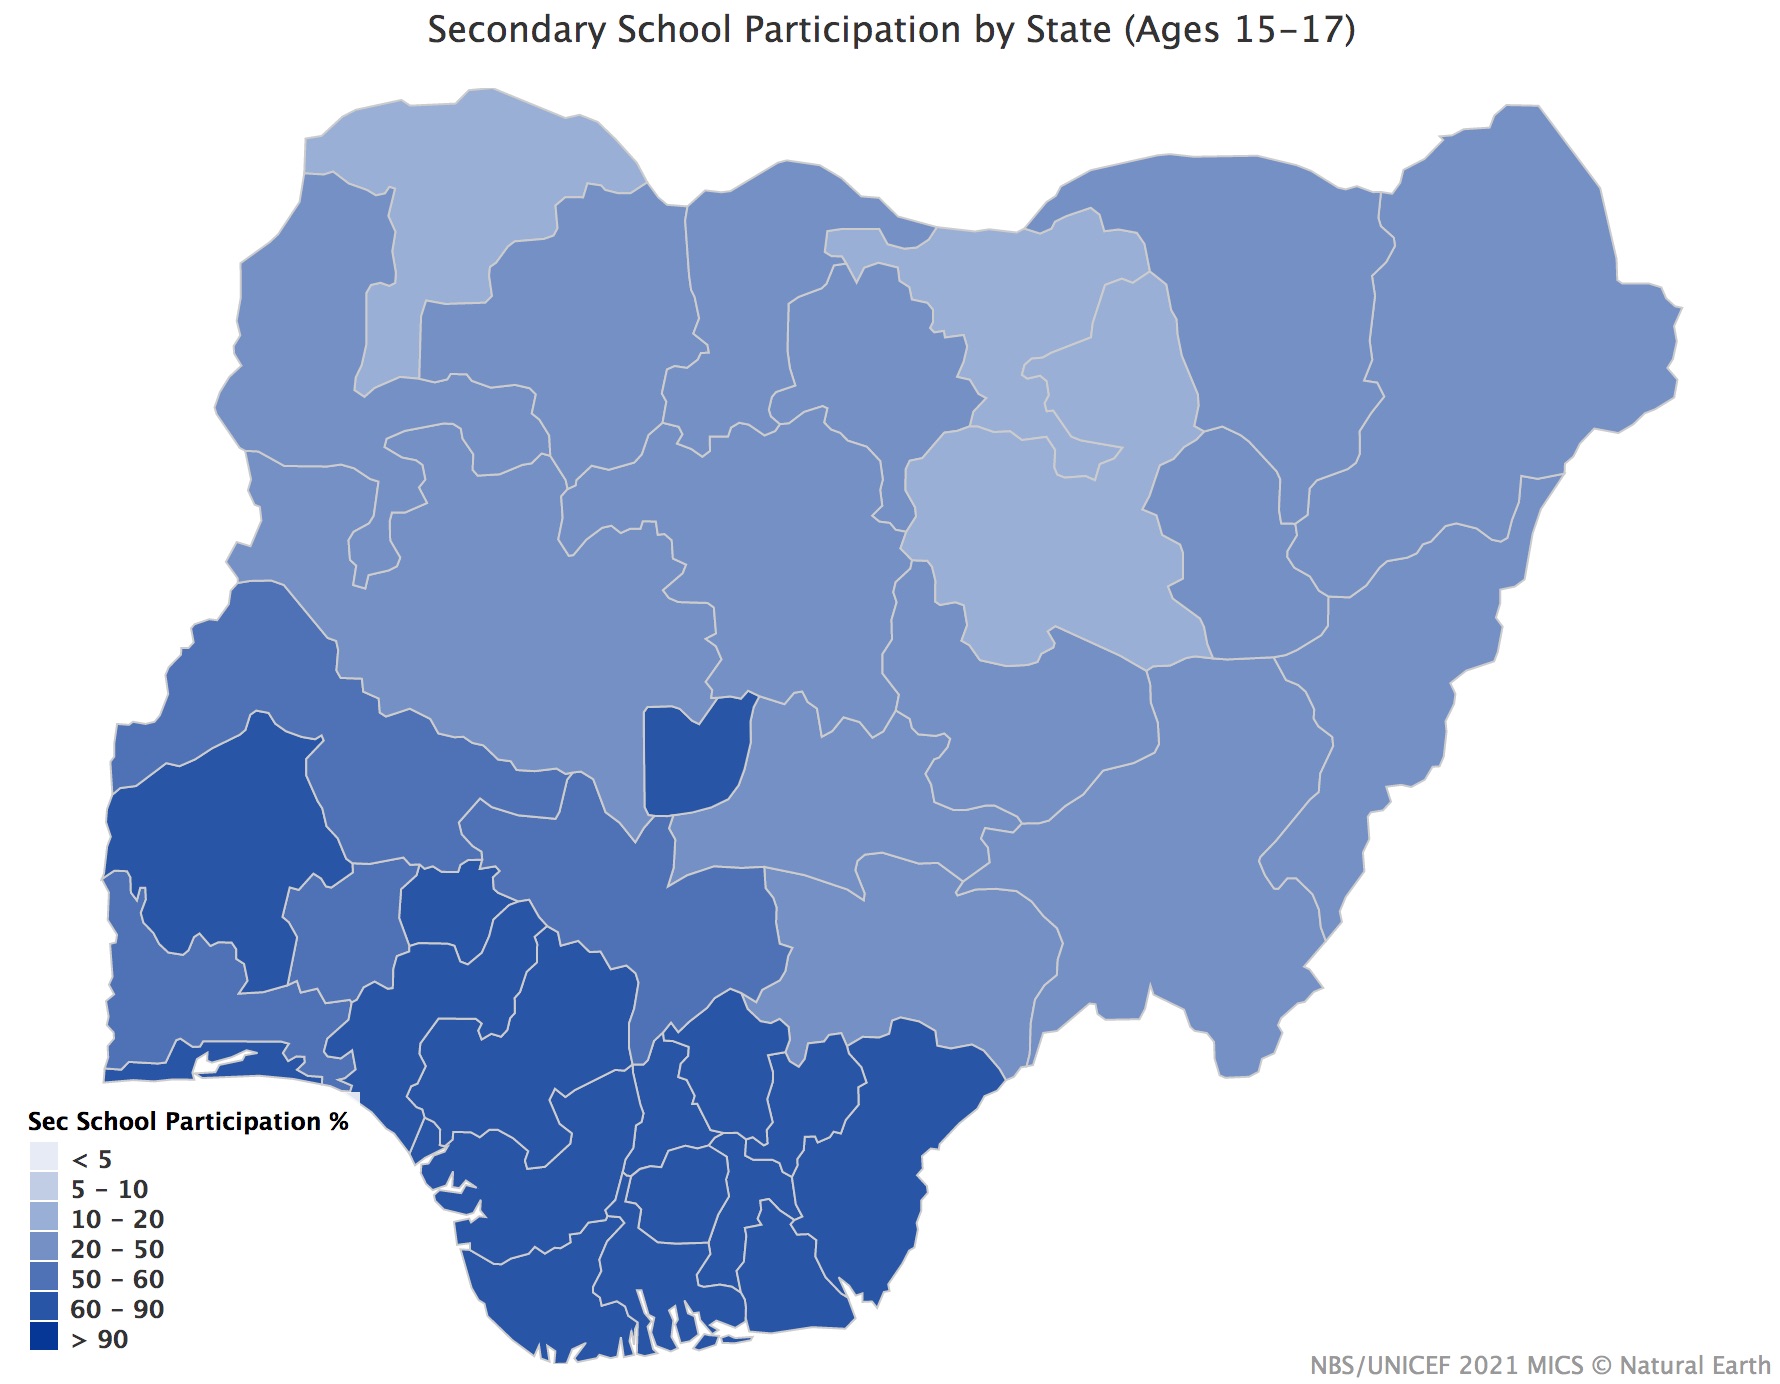 Secondary School Participation Rates